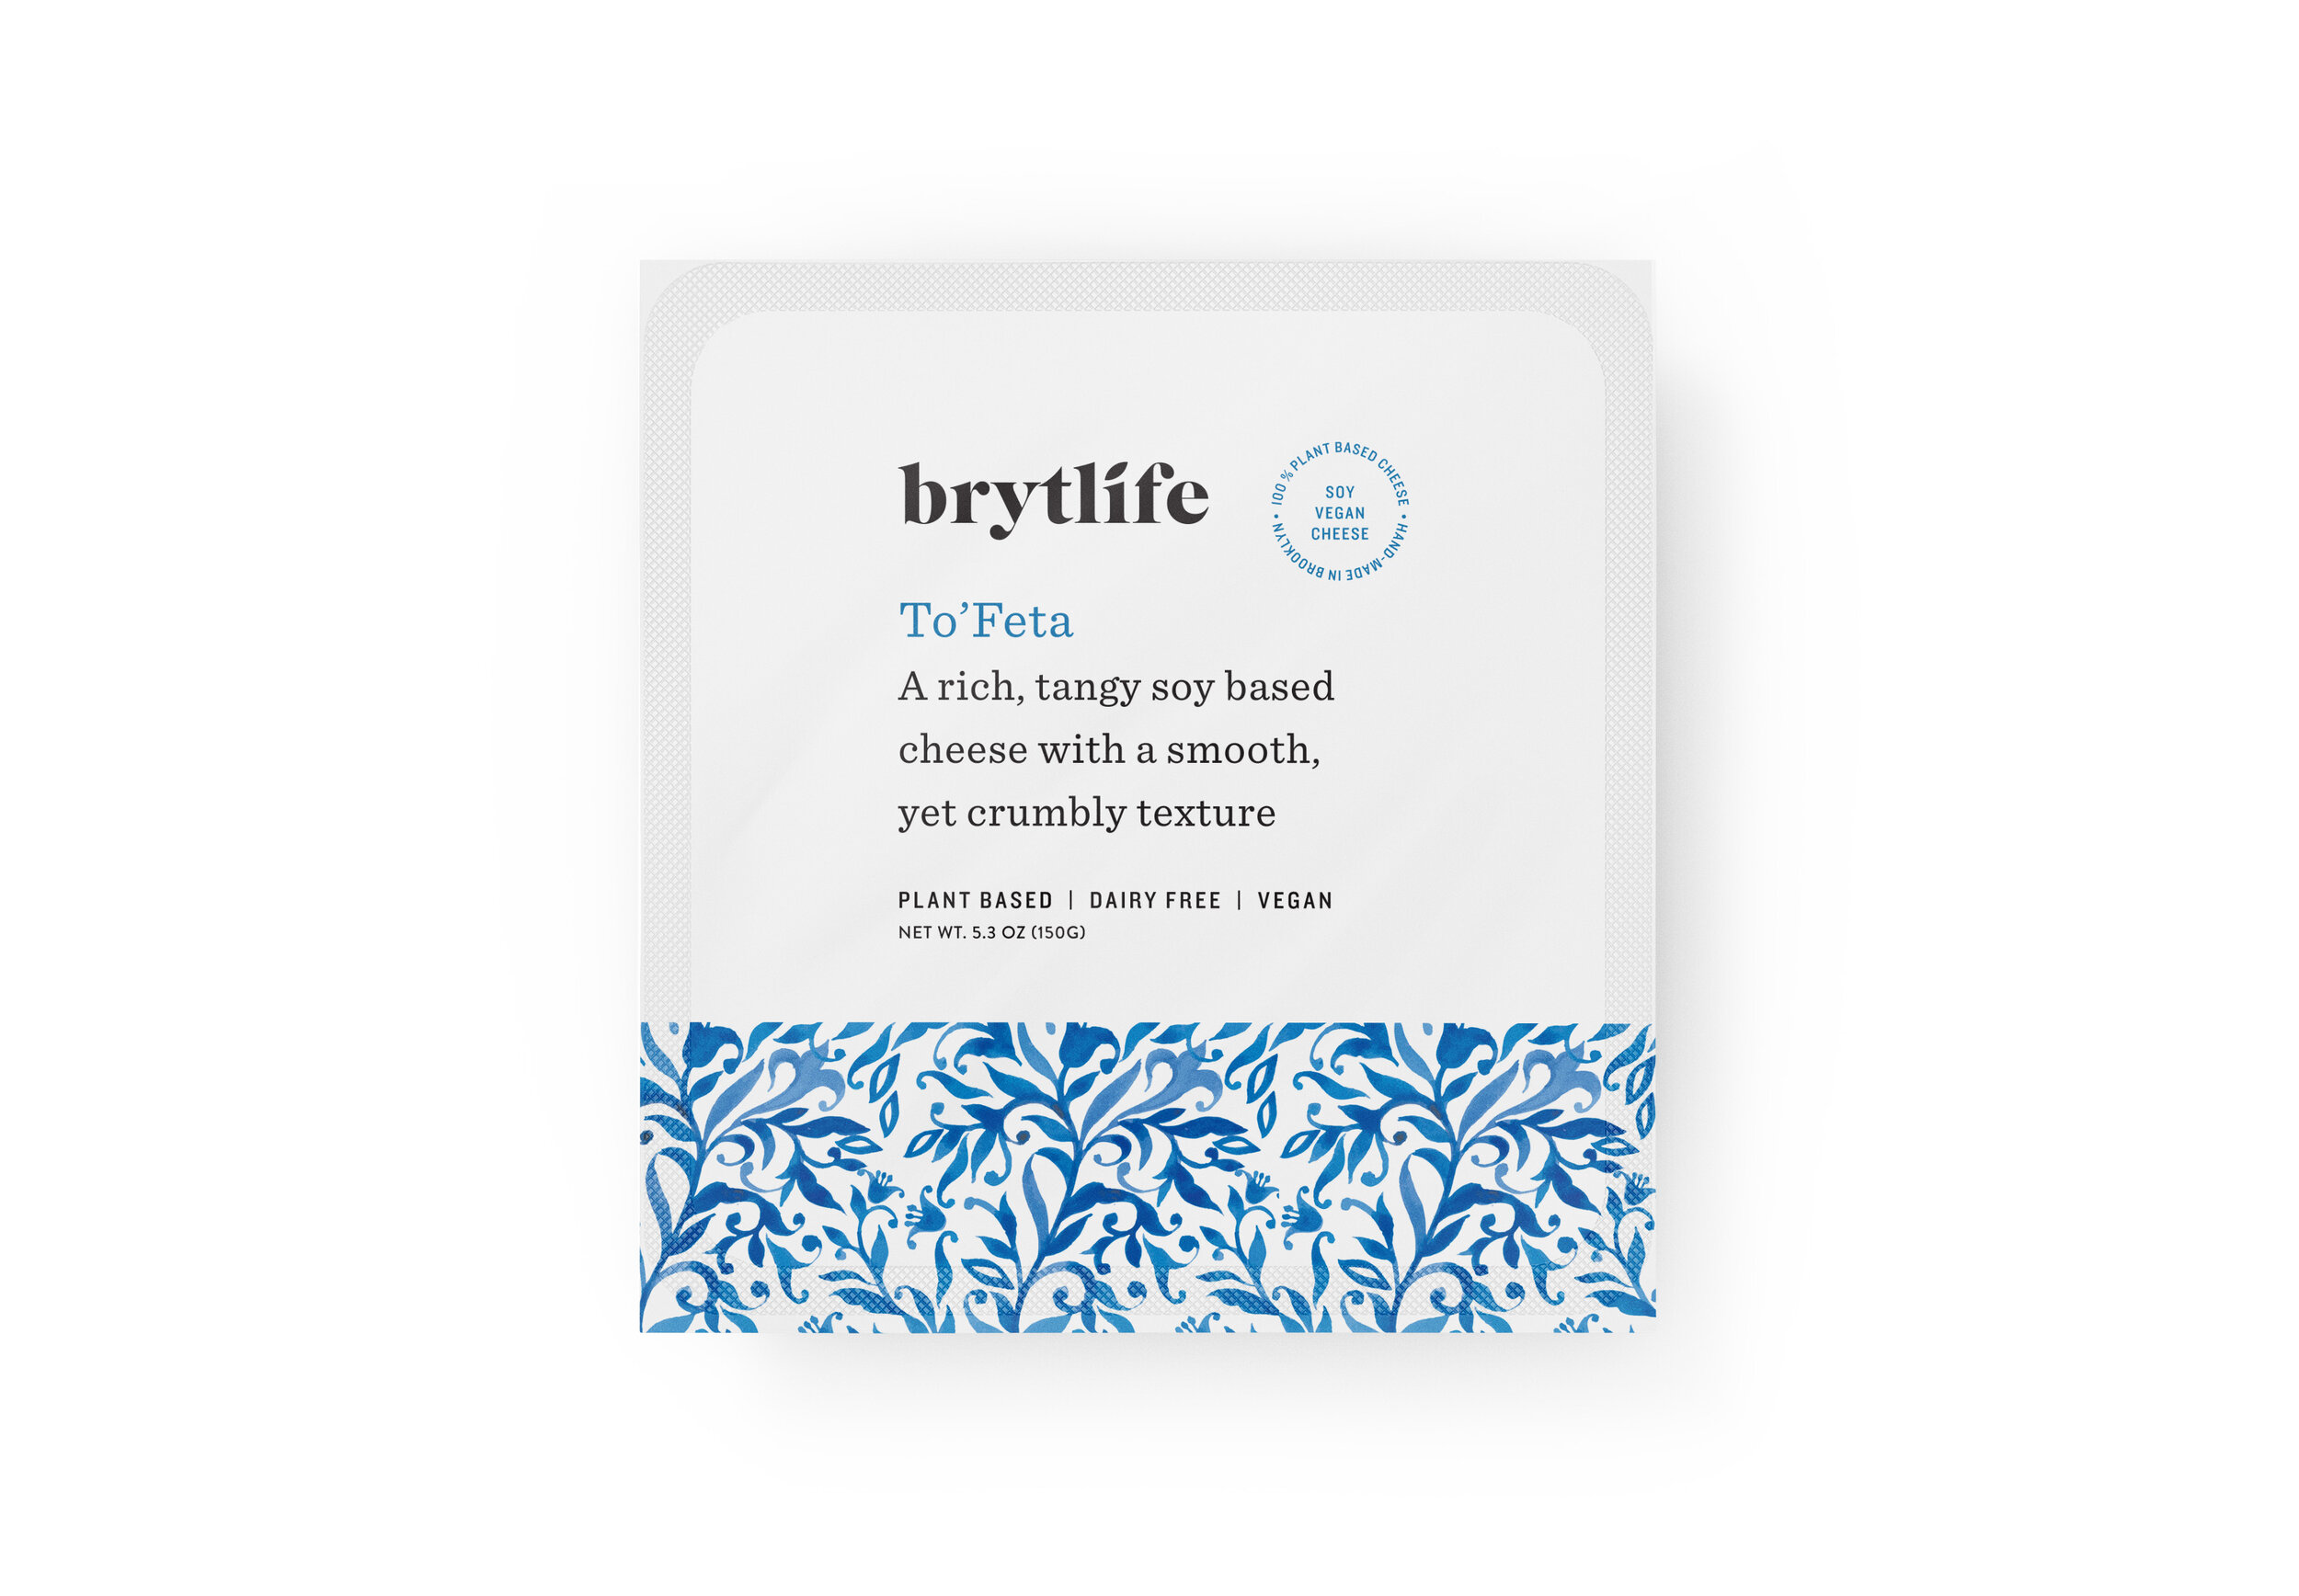 Brytlife Vegan Feta Cheese Packaging Design by The Artful Union